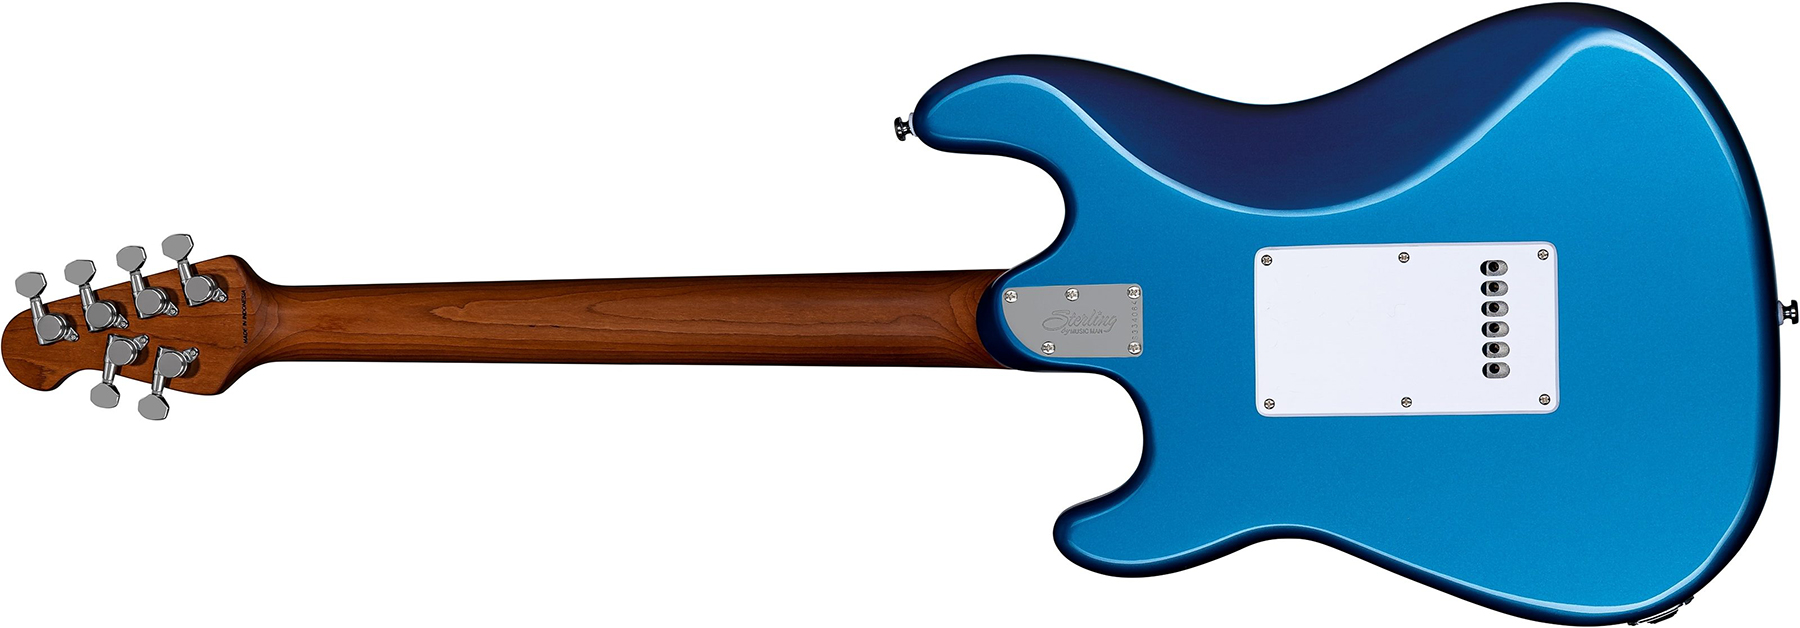 Sterling By Musicman Cutlass Ct50sss 3s Trem Rw - Toluca Lake Blue - Guitare Électrique Forme Str - Variation 1